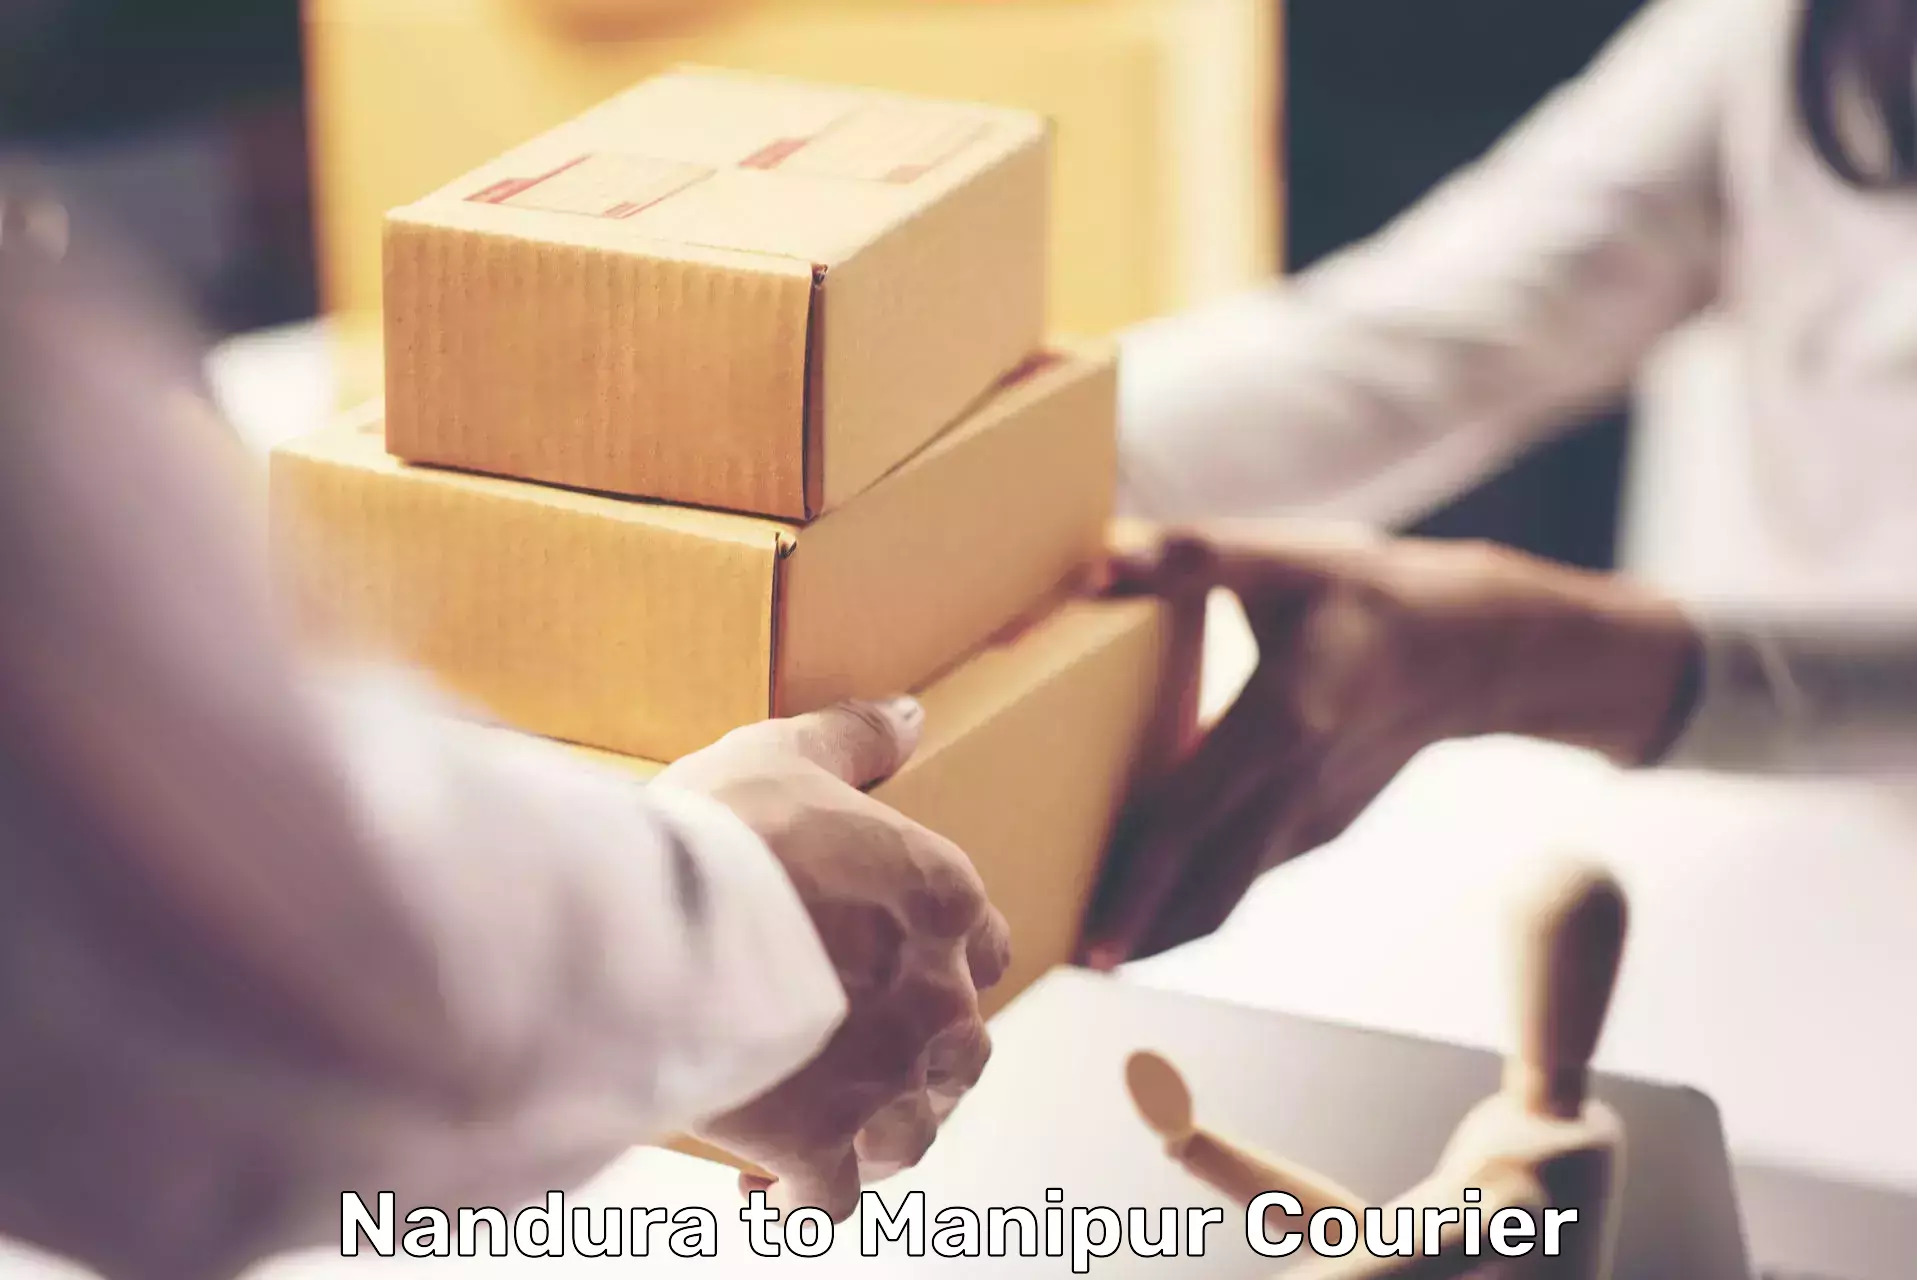 Quick dispatch service Nandura to Manipur